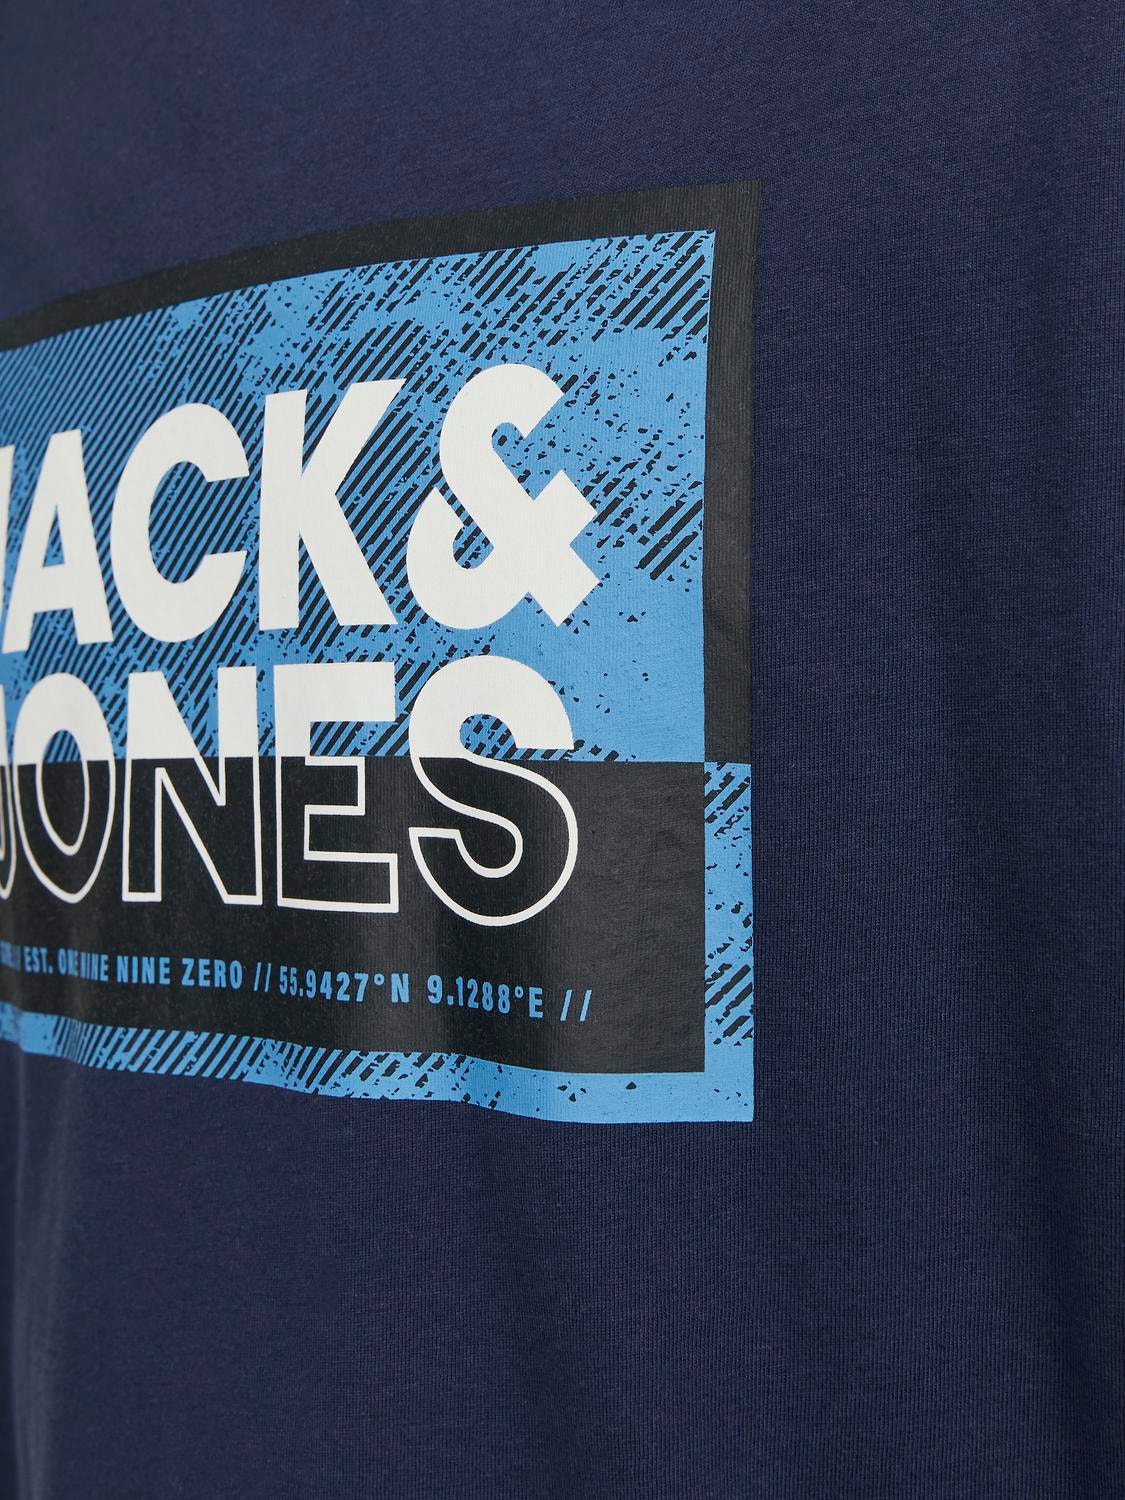 Jack & Jones Logo Pyöreä pääntie T-paita -Navy Blazer - 12253442